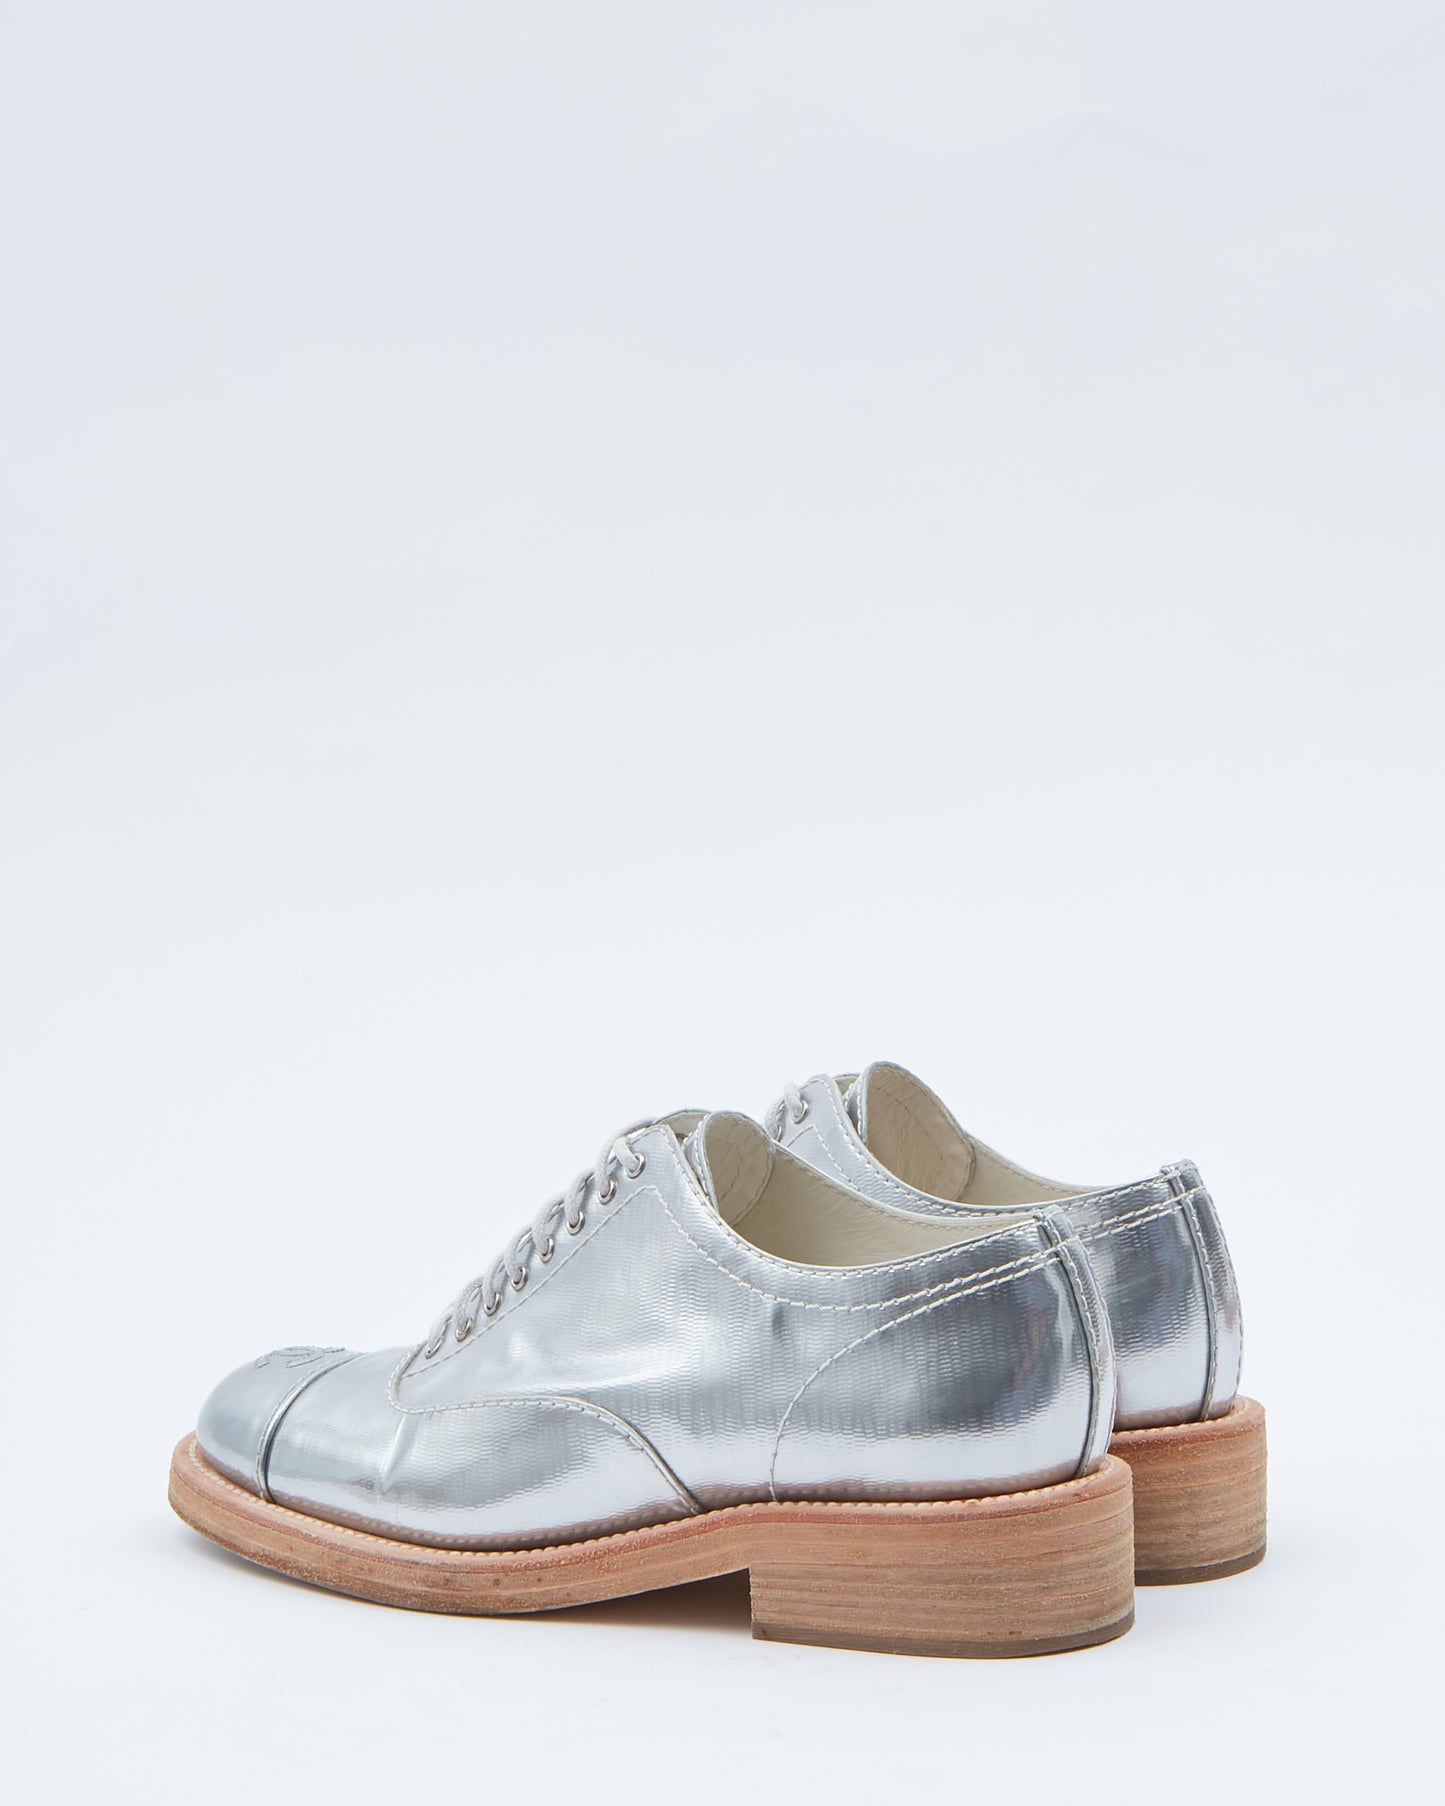 Chanel Silver Interlocking CC Logo Patent Leather Oxfords Shoe - 37.5